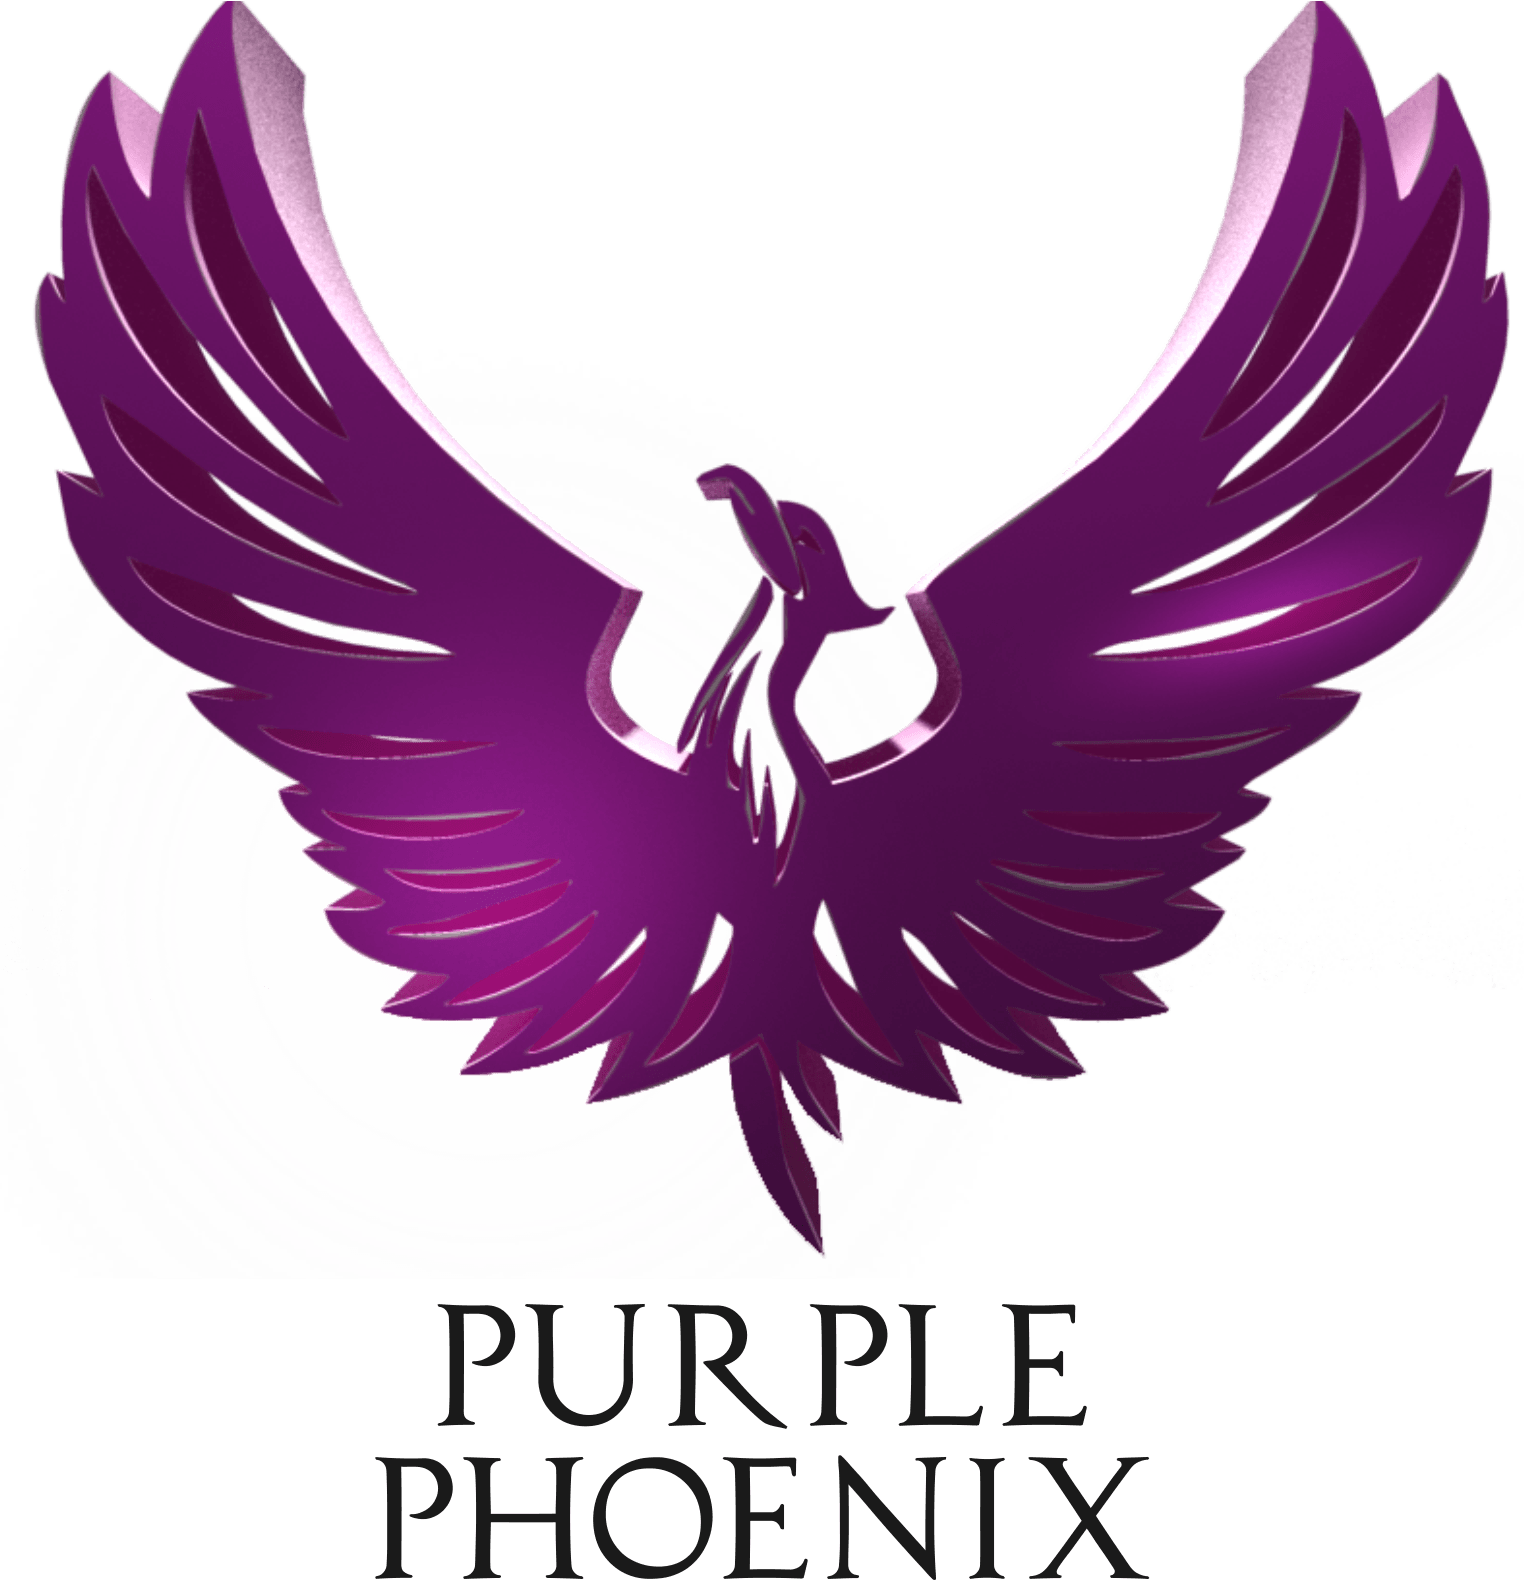 Purple Phoenix Logo - The Amazon, The Phoenix and The Colour Purple